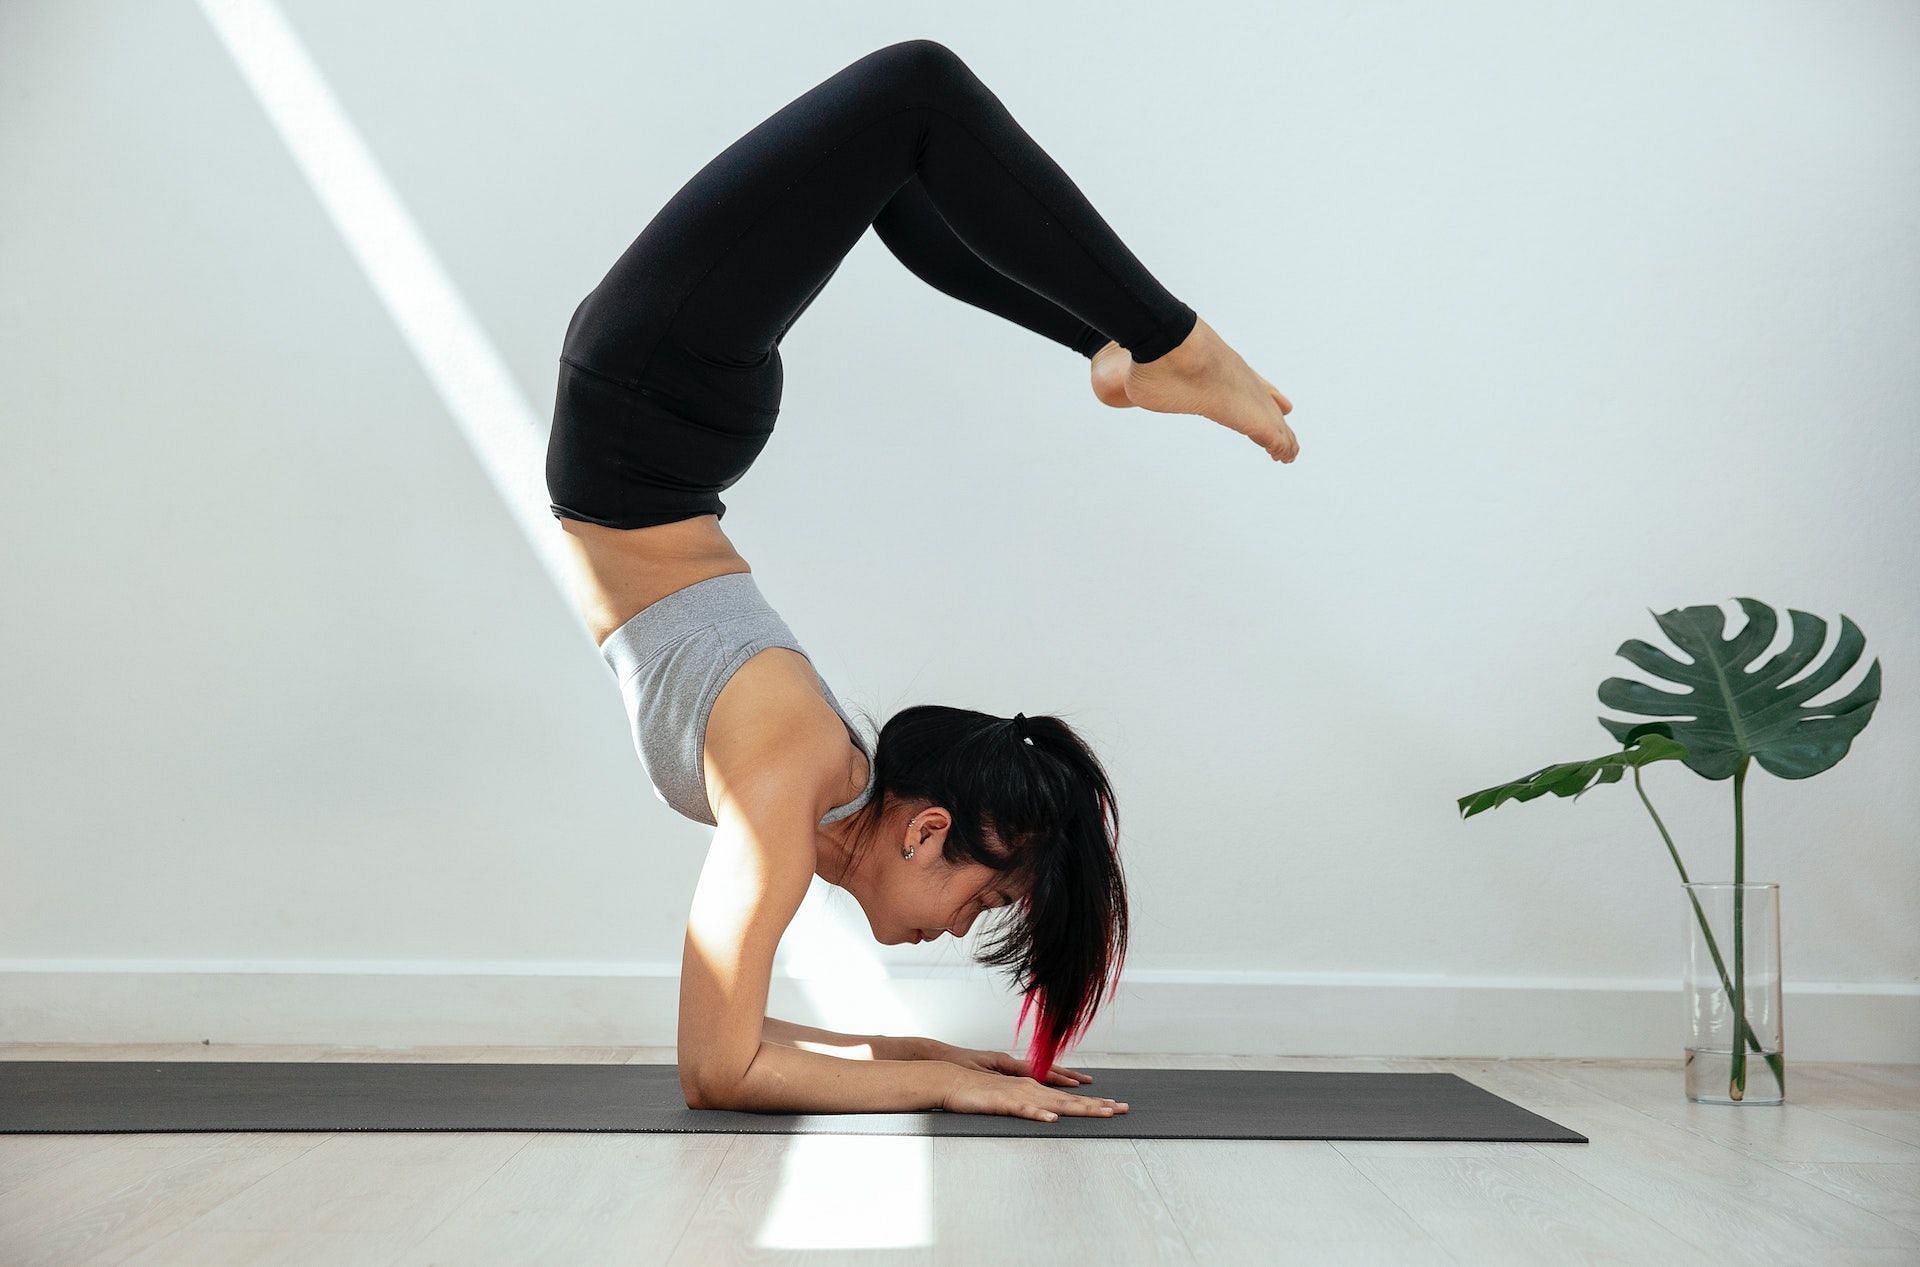 Scorpion Pose | Yoga benefits, Yoga poses for beginners, Scorpion pose yoga